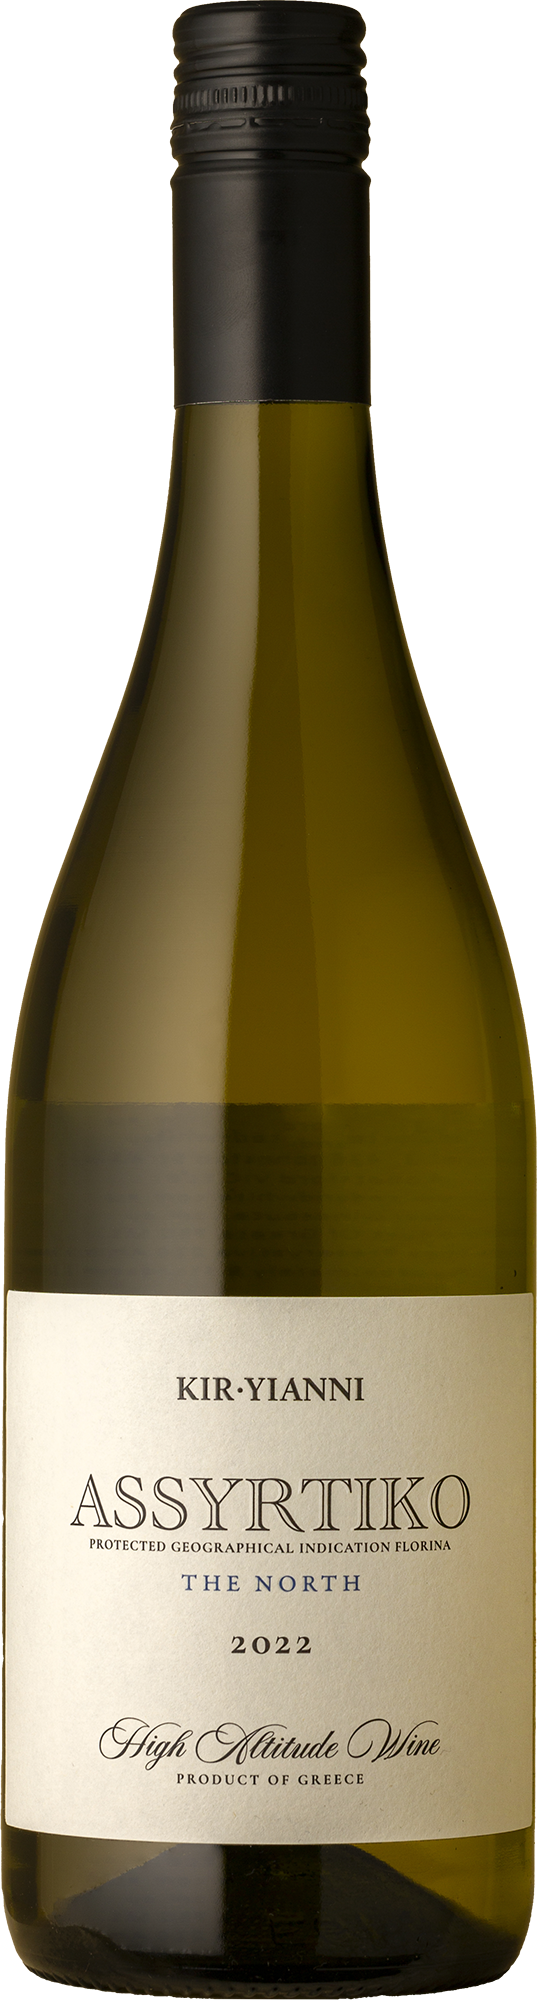 Kir-Yianni - Assyrtiko 2022 White Wine